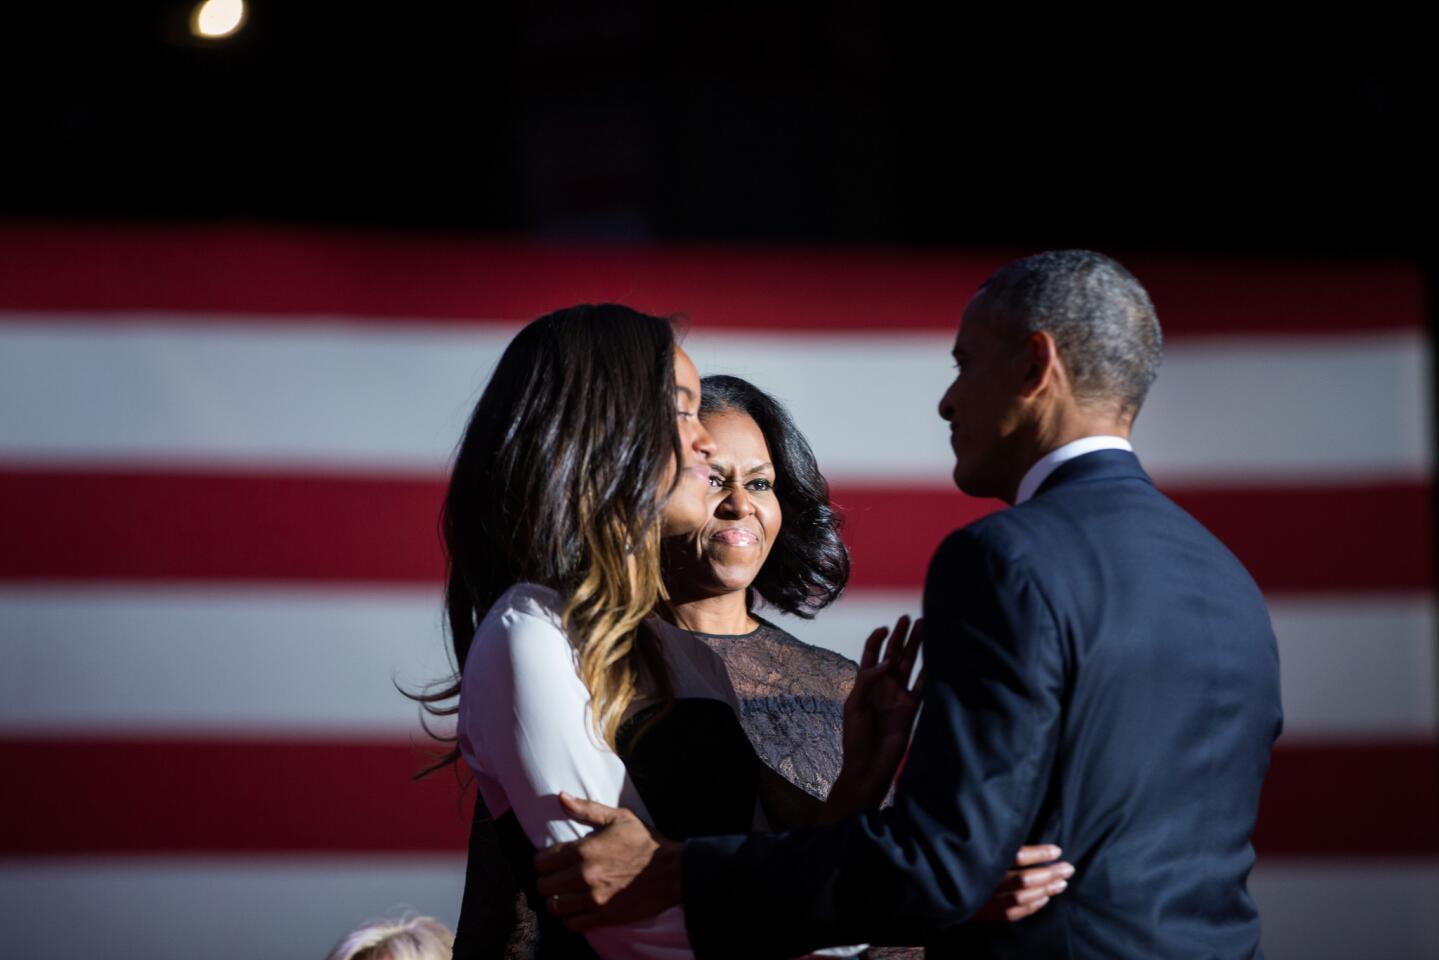 President Obama's farewell address